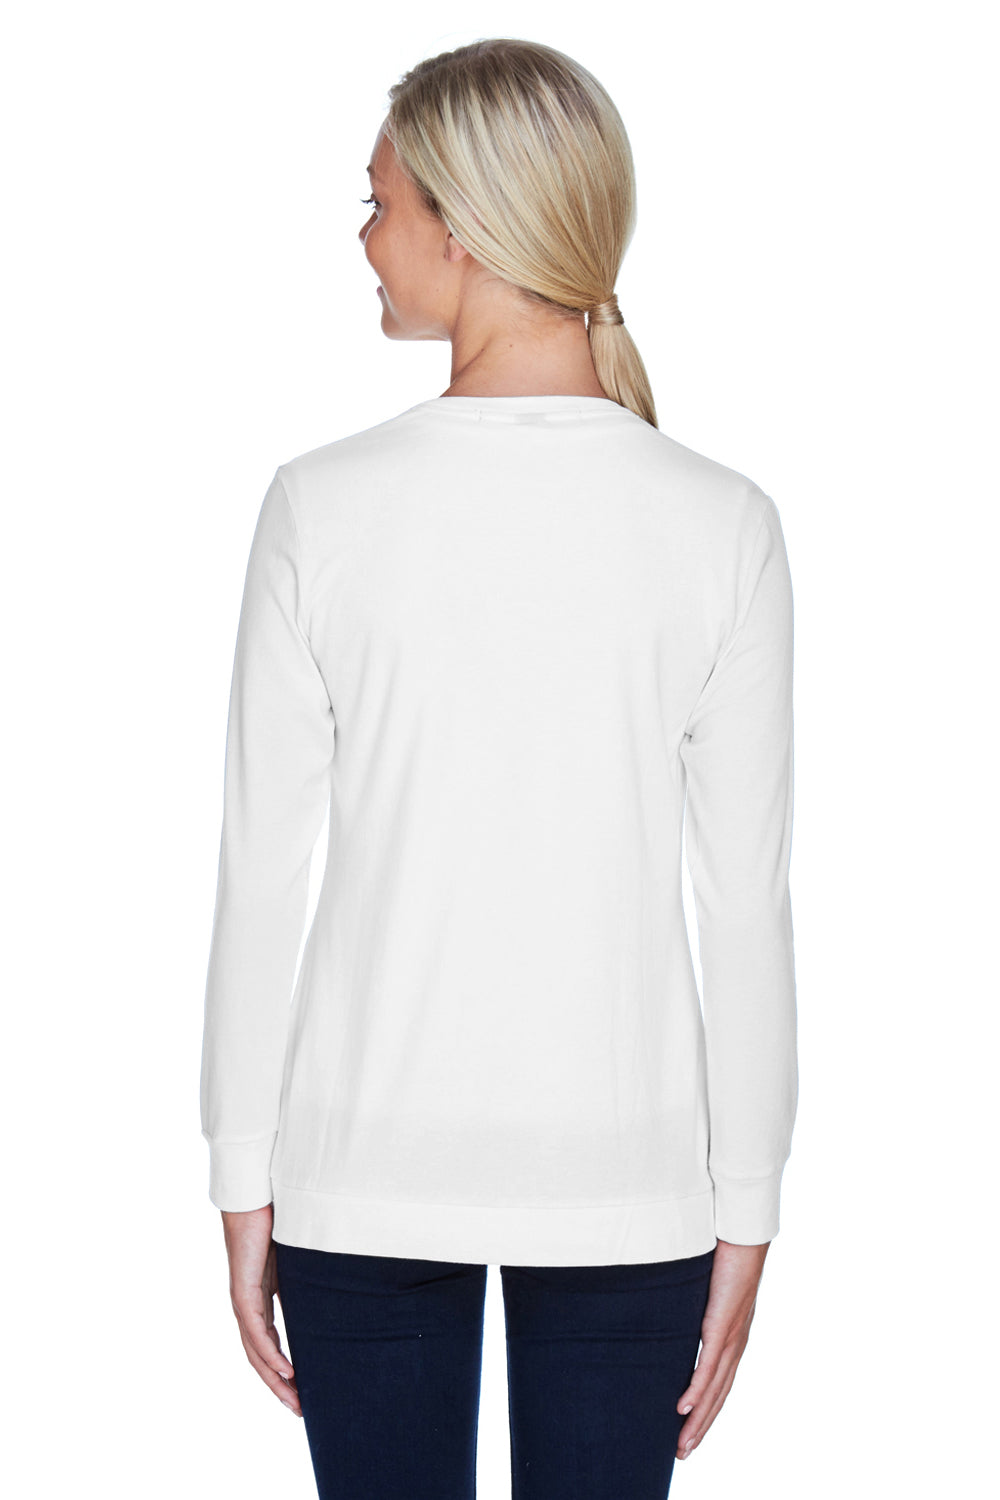 Devon & Jones DP181W Womens Perfect Fit Ribbon Cardigan Sweater White Back